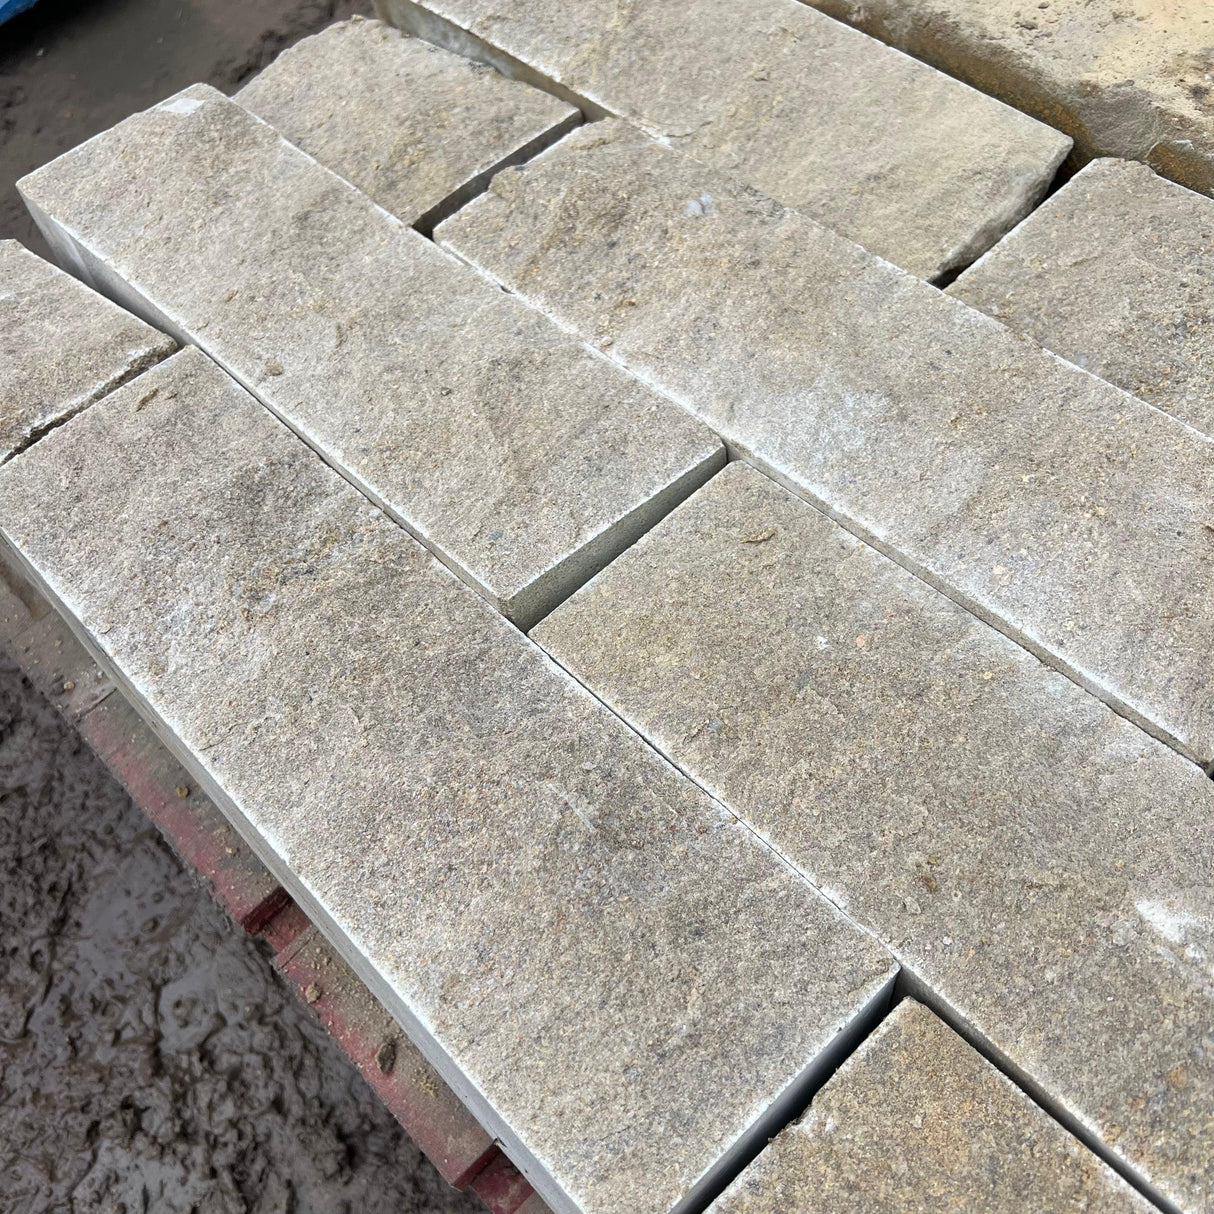 100mm Split Face Walling Stone - Per SQM - Reclaimed Brick Company